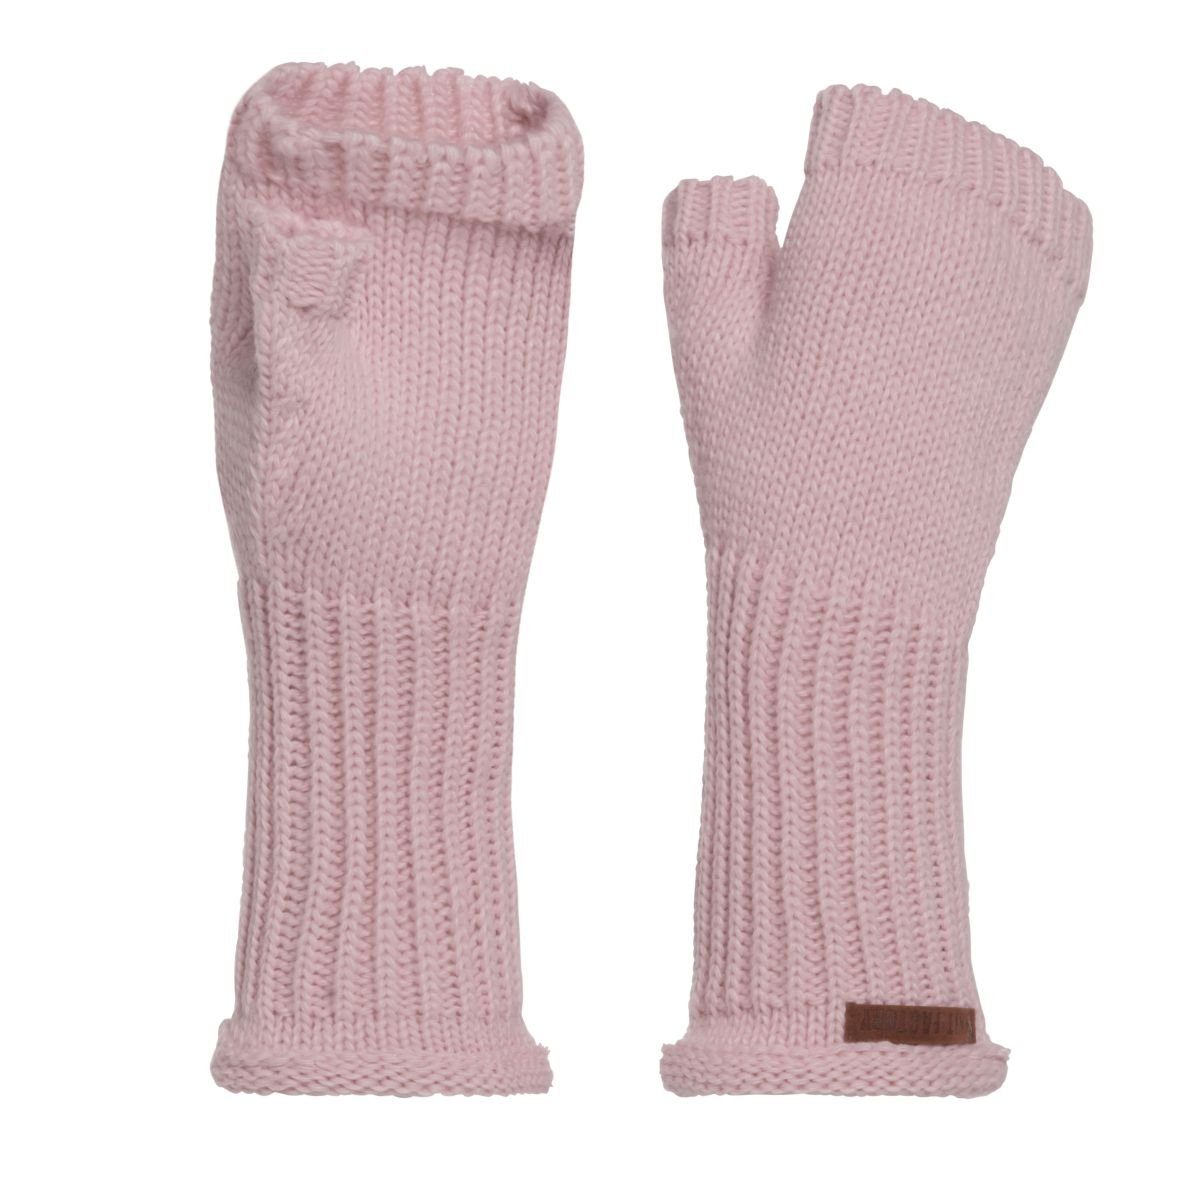 Knit Factory Strickhandschuhe Cleo Handschuhe One Size Glatt Rosa Handschuhe Handstulpen Handschuhe ihne Finger